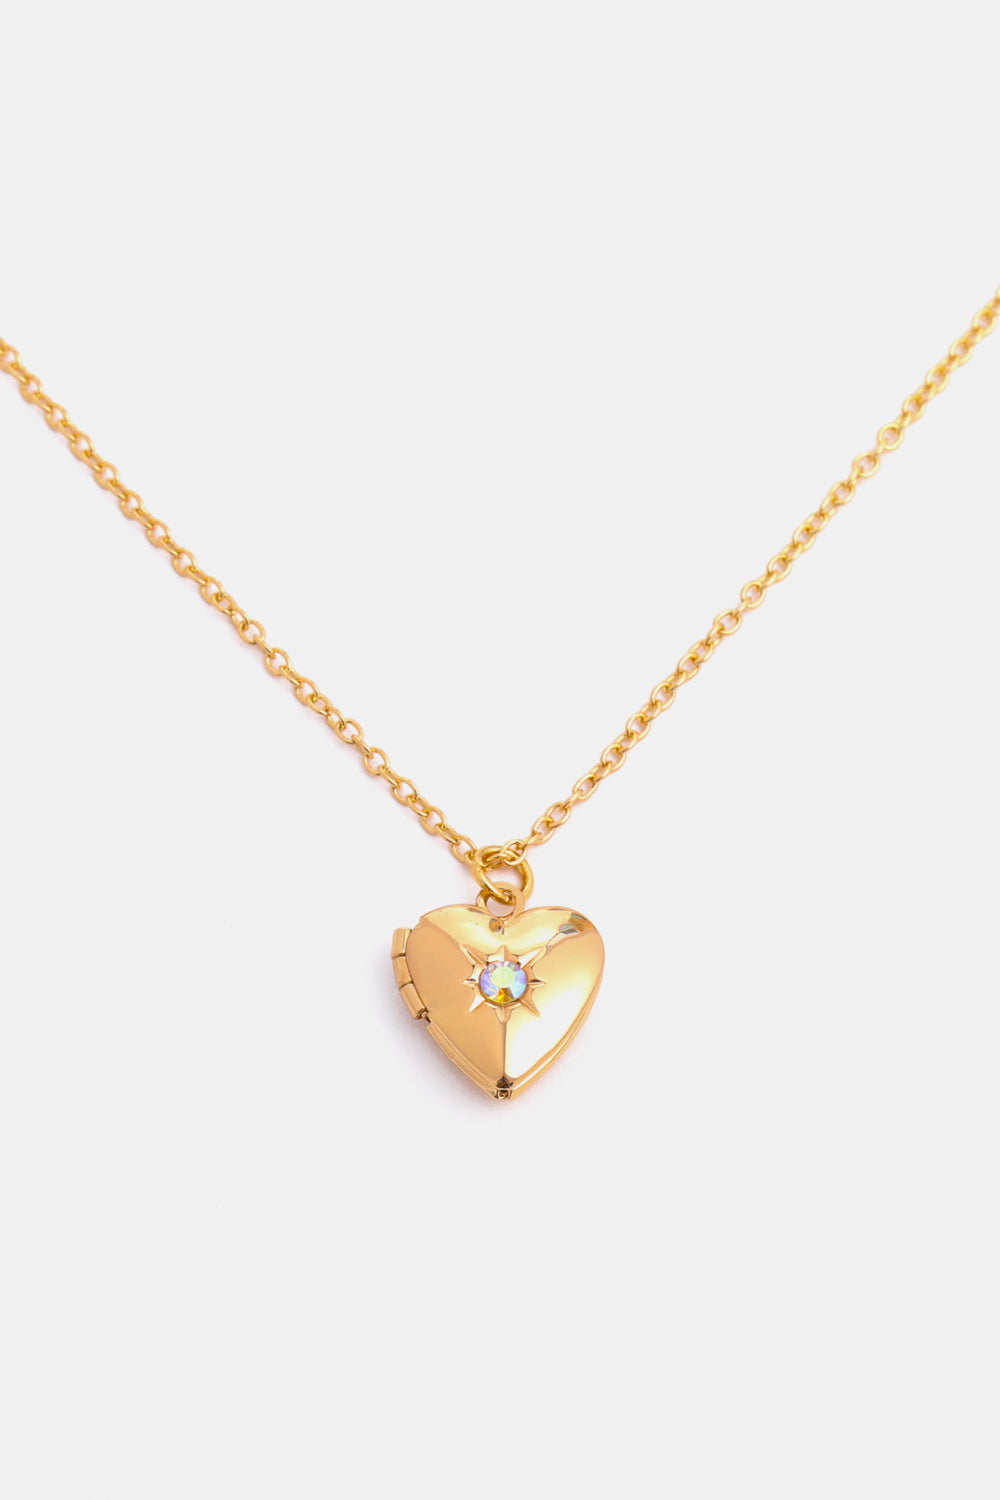 Zircon Heart Shape 14K Gold-Plated Pendant Necklace - Lylah's